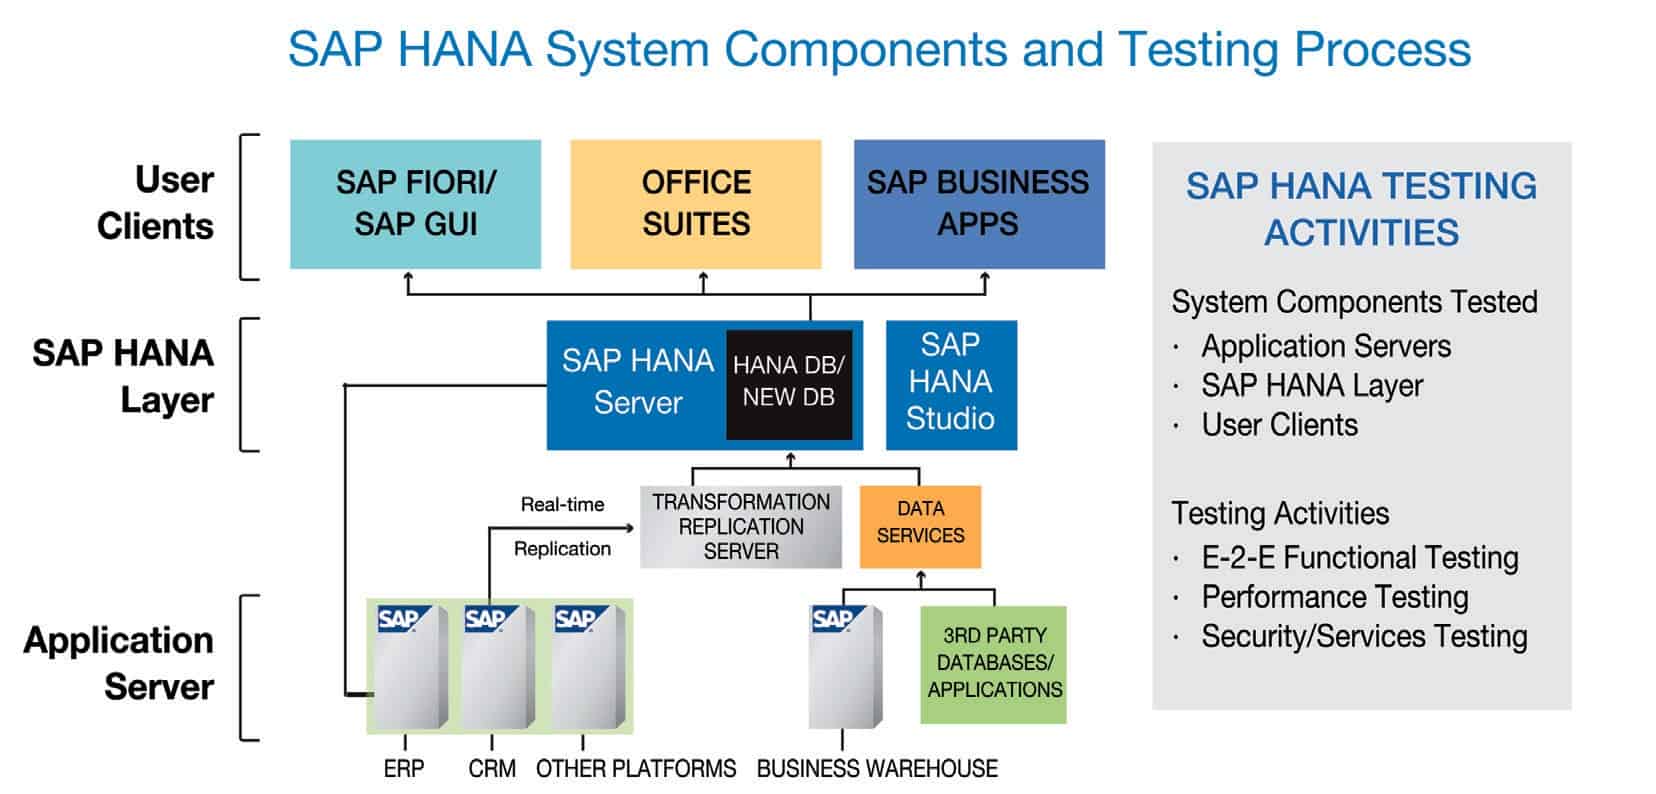 SAP HANA System Components